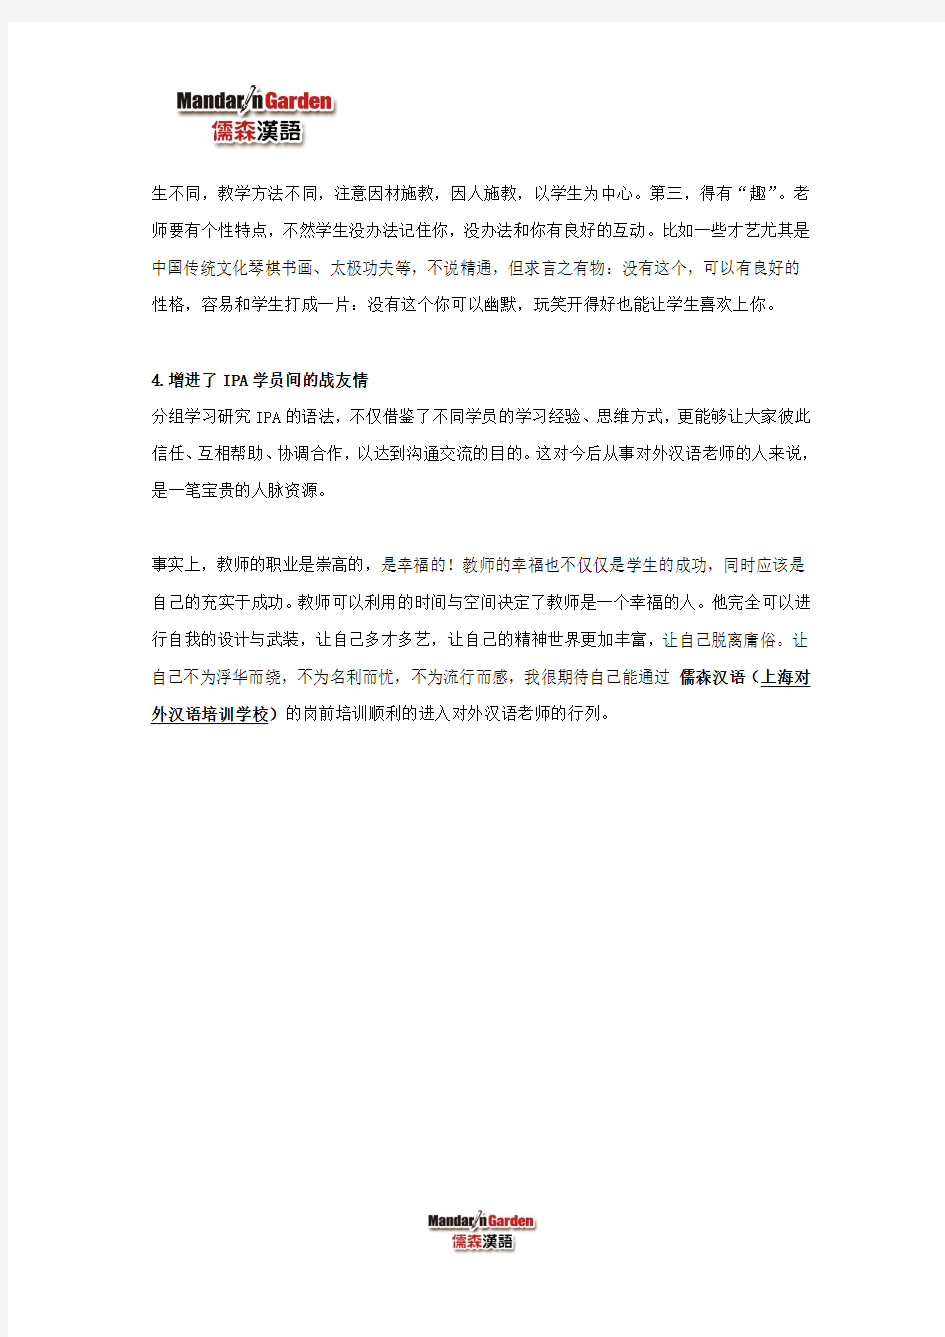 IPA对外汉语教学之岗前培训：我在上海对外汉语培训学校收获的日子